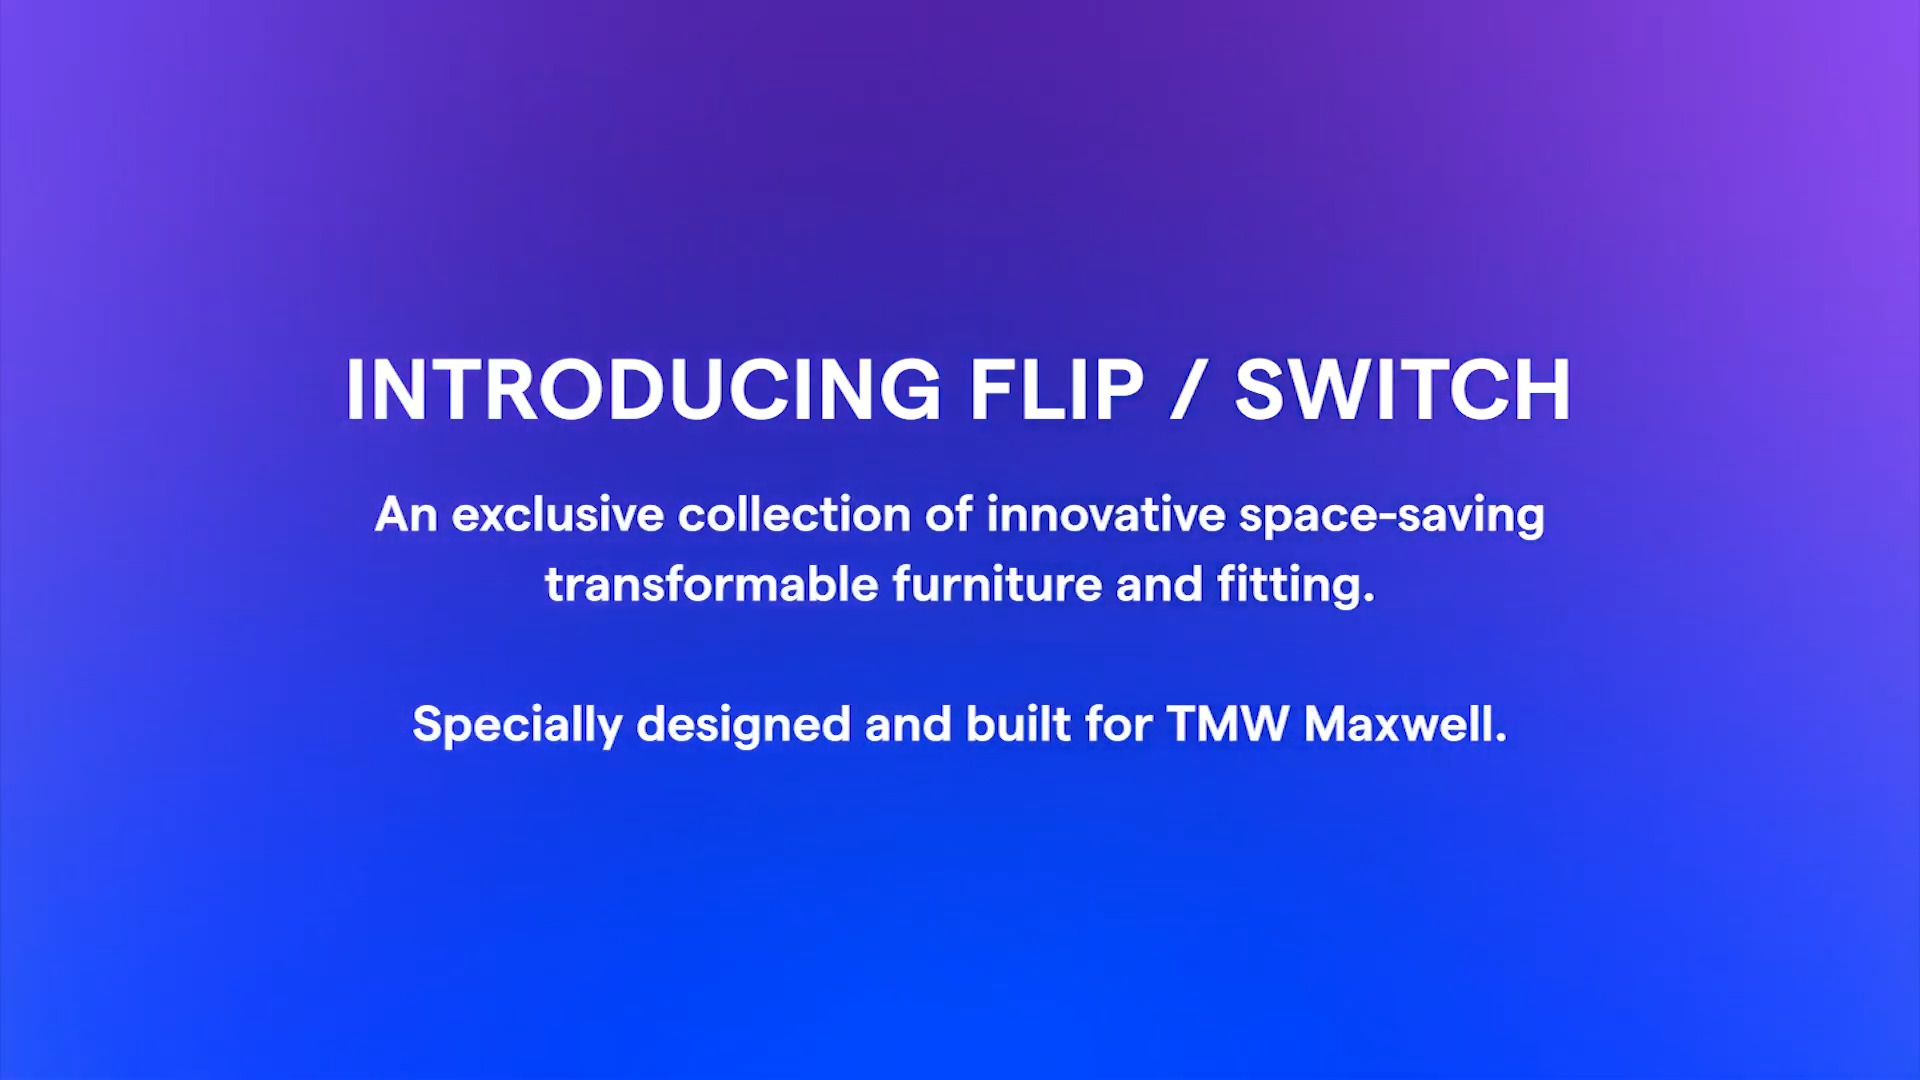 TMW Maxwell Flip & Switch Concept